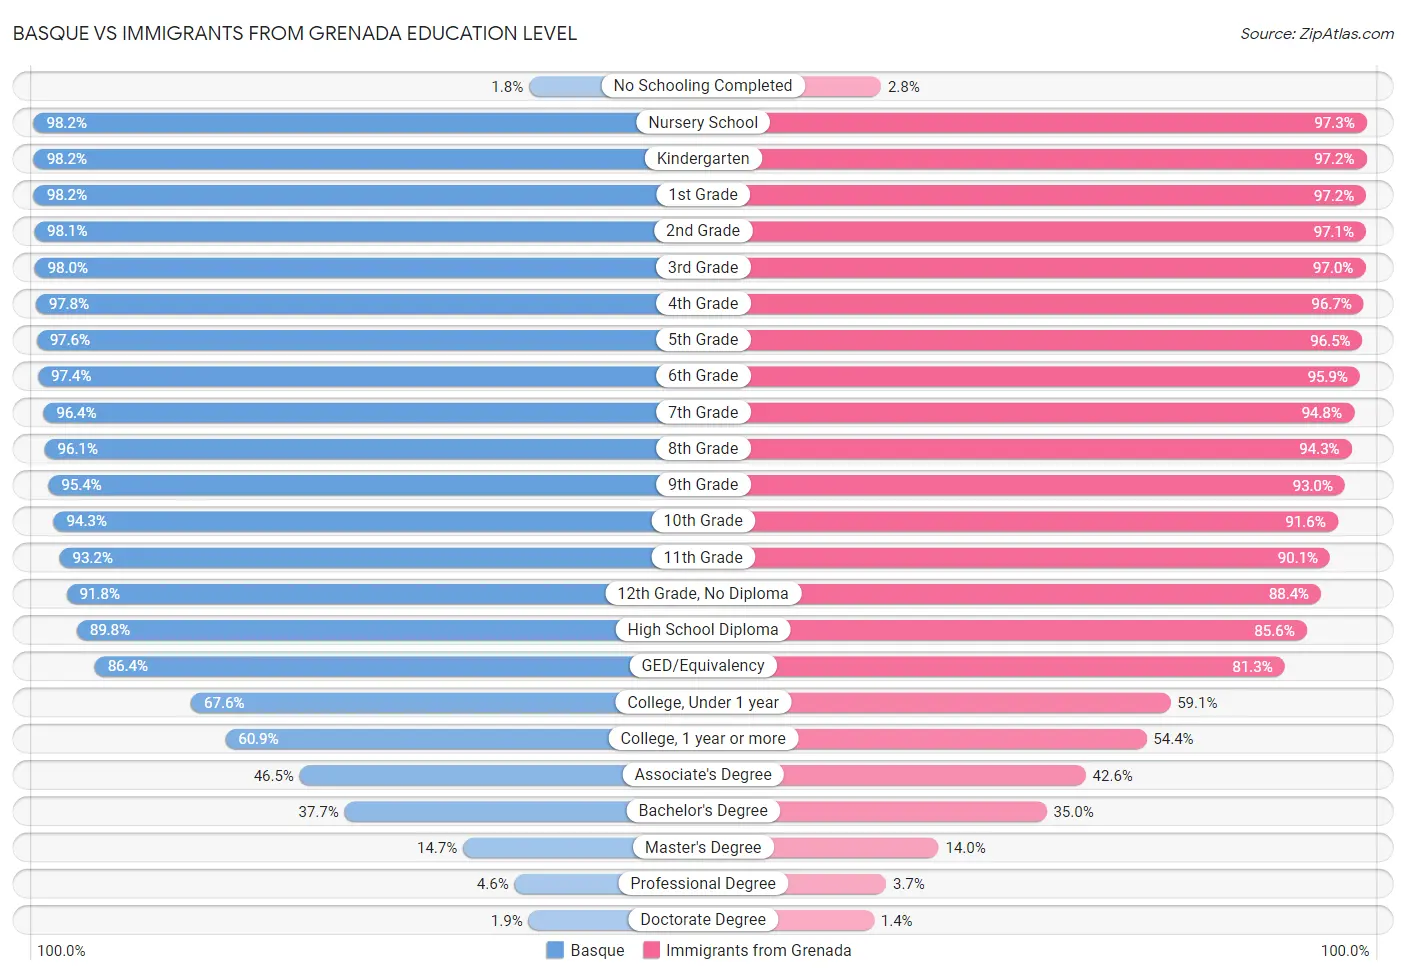 Basque vs Immigrants from Grenada Education Level